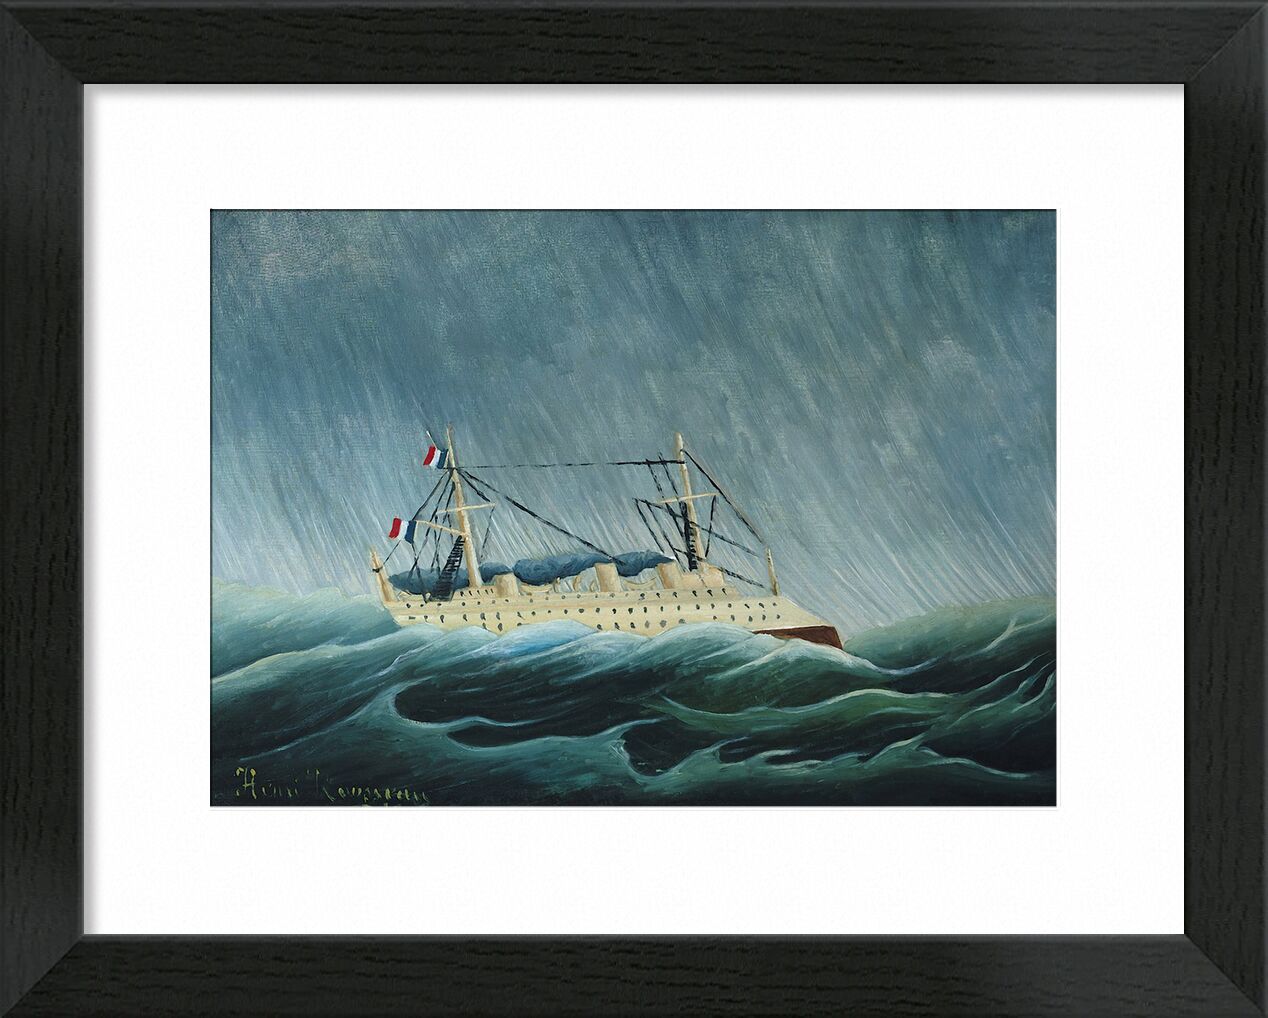 The storm tossed vessel desde Bellas artes, Prodi Art, huracán, lluvia, tormenta, mar, Rousseau, barco, barco